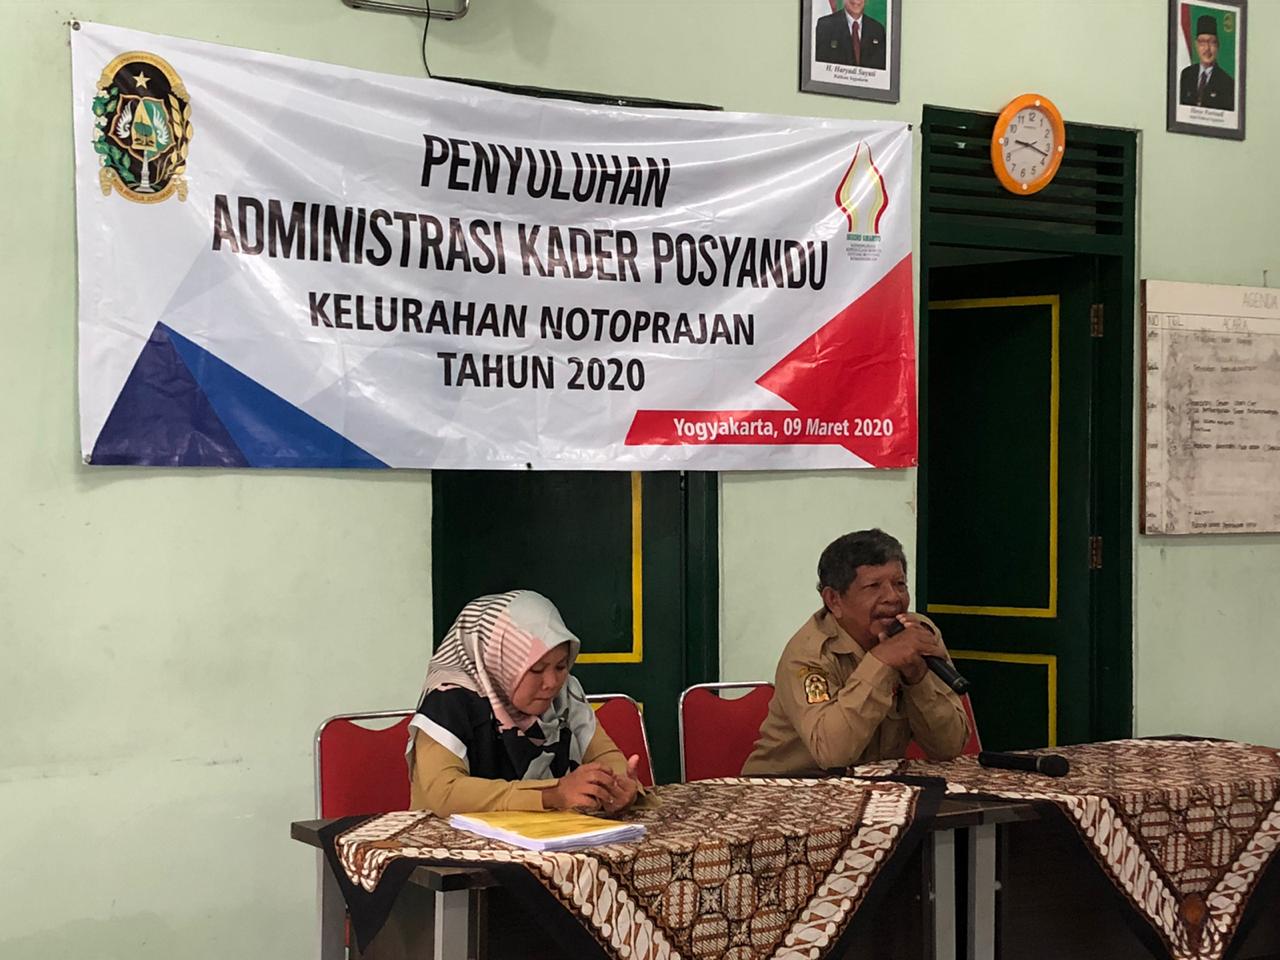 Pelatihan Aministrasi Kader Posyandu Kelurahan Notoprajan Tahun 2020 tanggal 09 Maret 2020